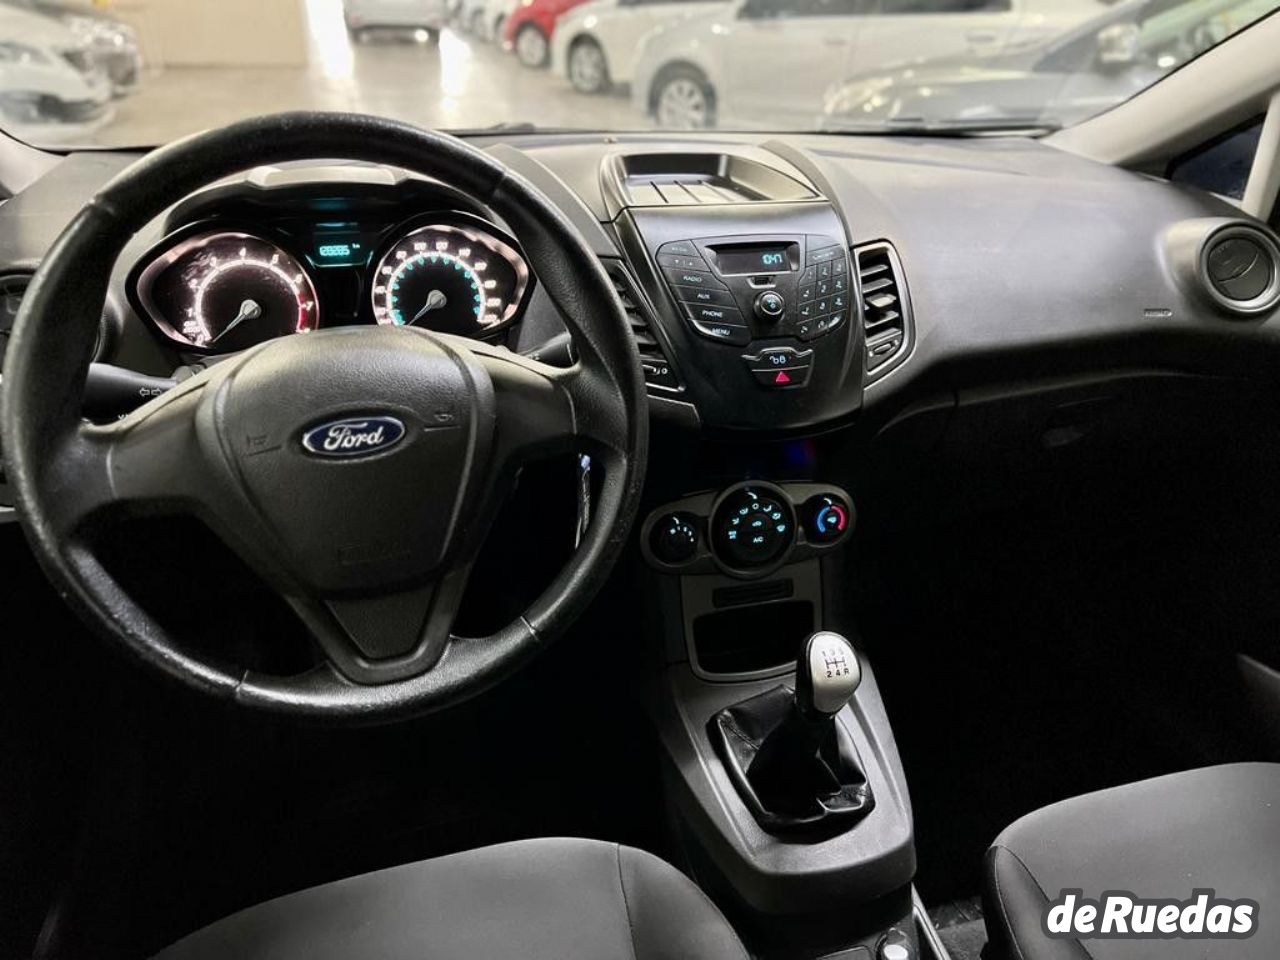 Ford Fiesta KD Usado en San Juan, deRuedas